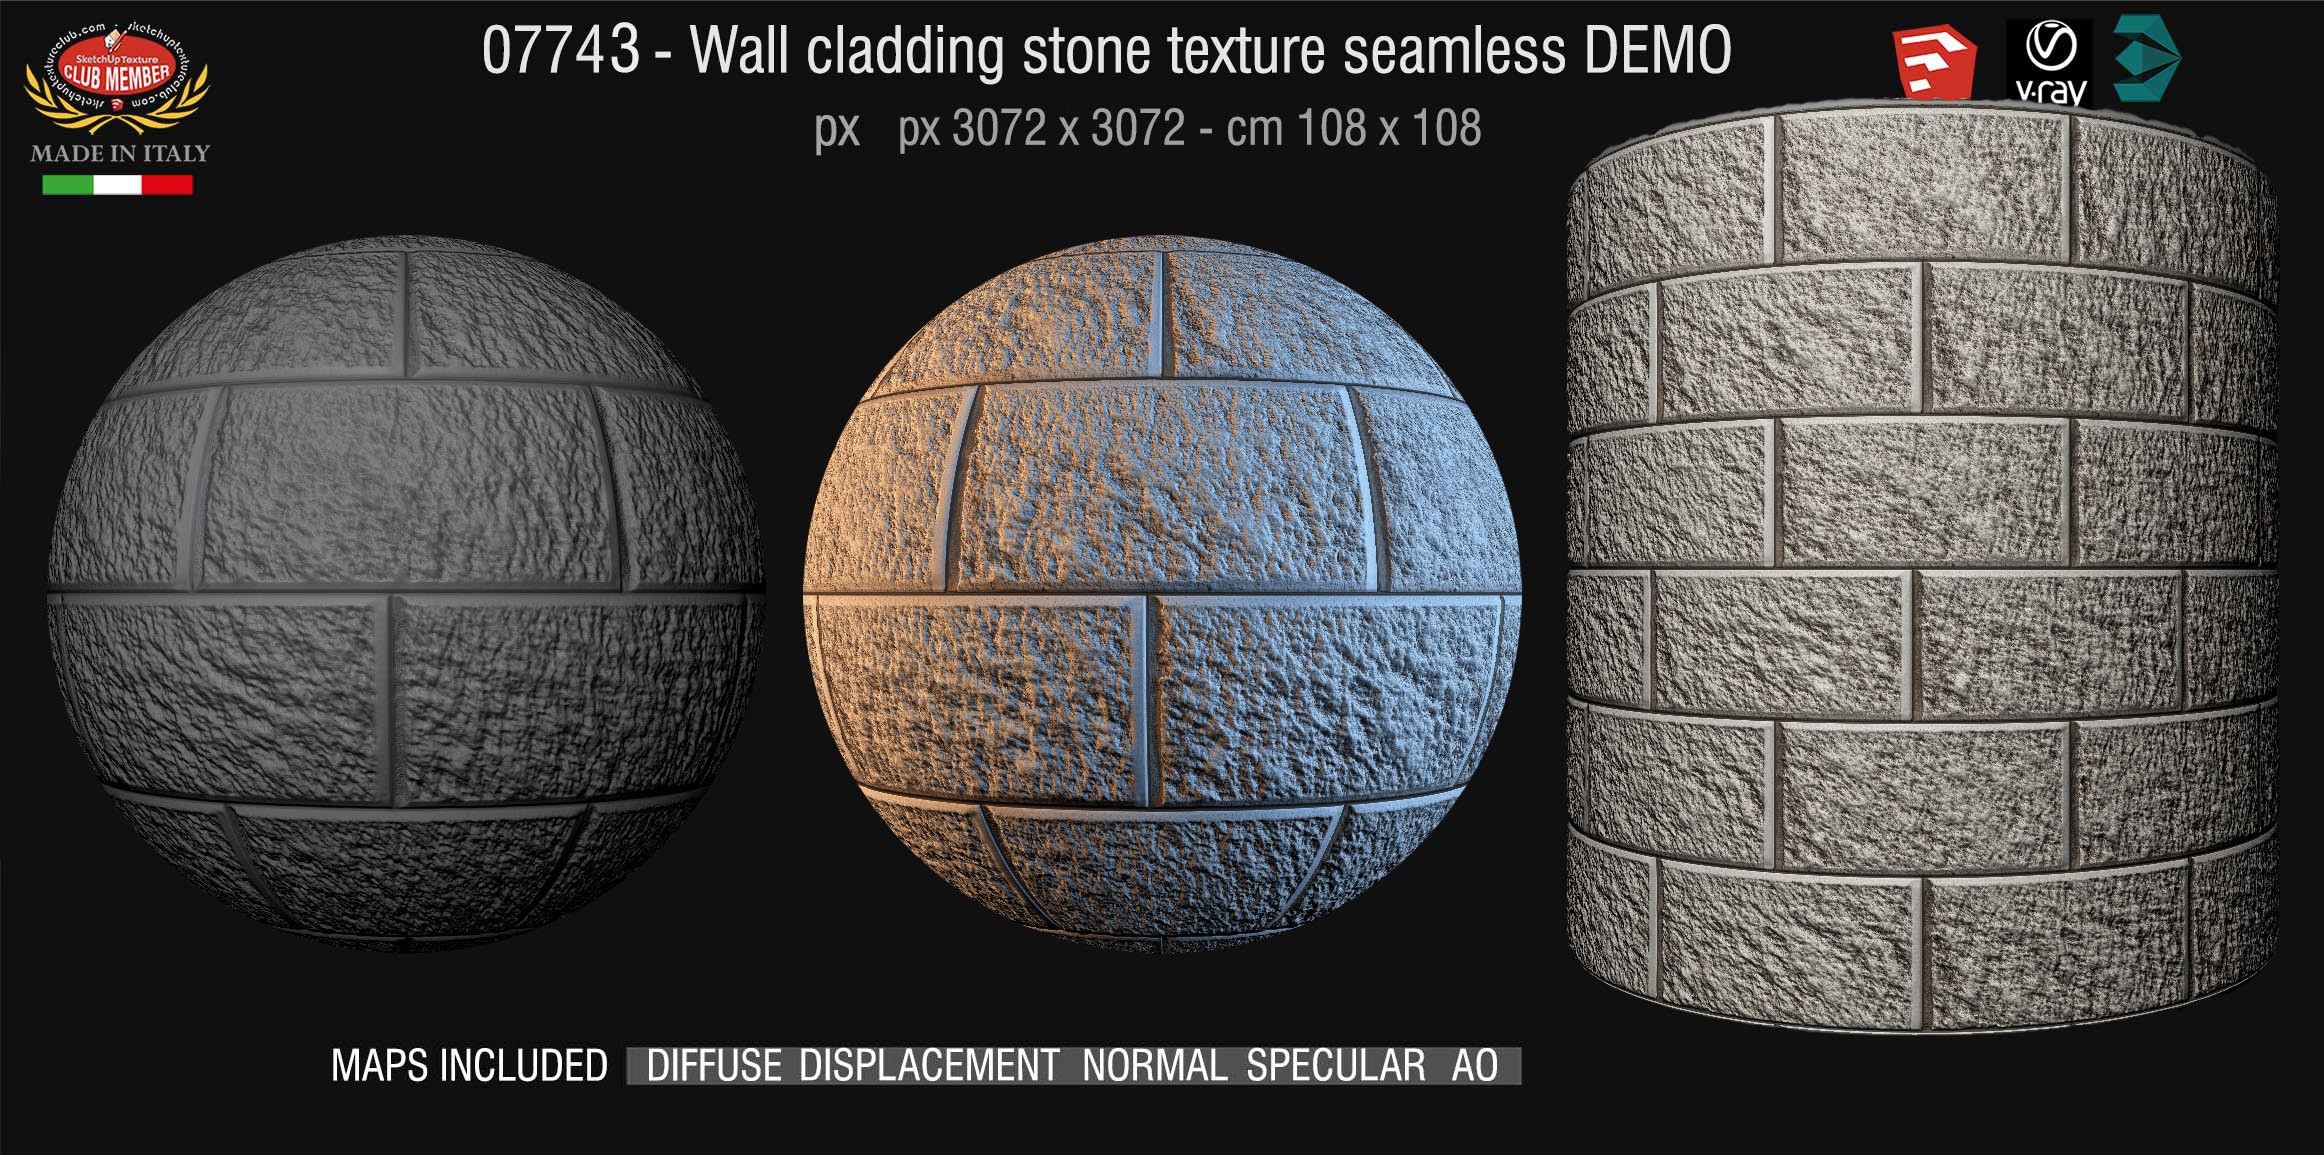 07743/6 Wall cladding stone texture pbr seamless demo